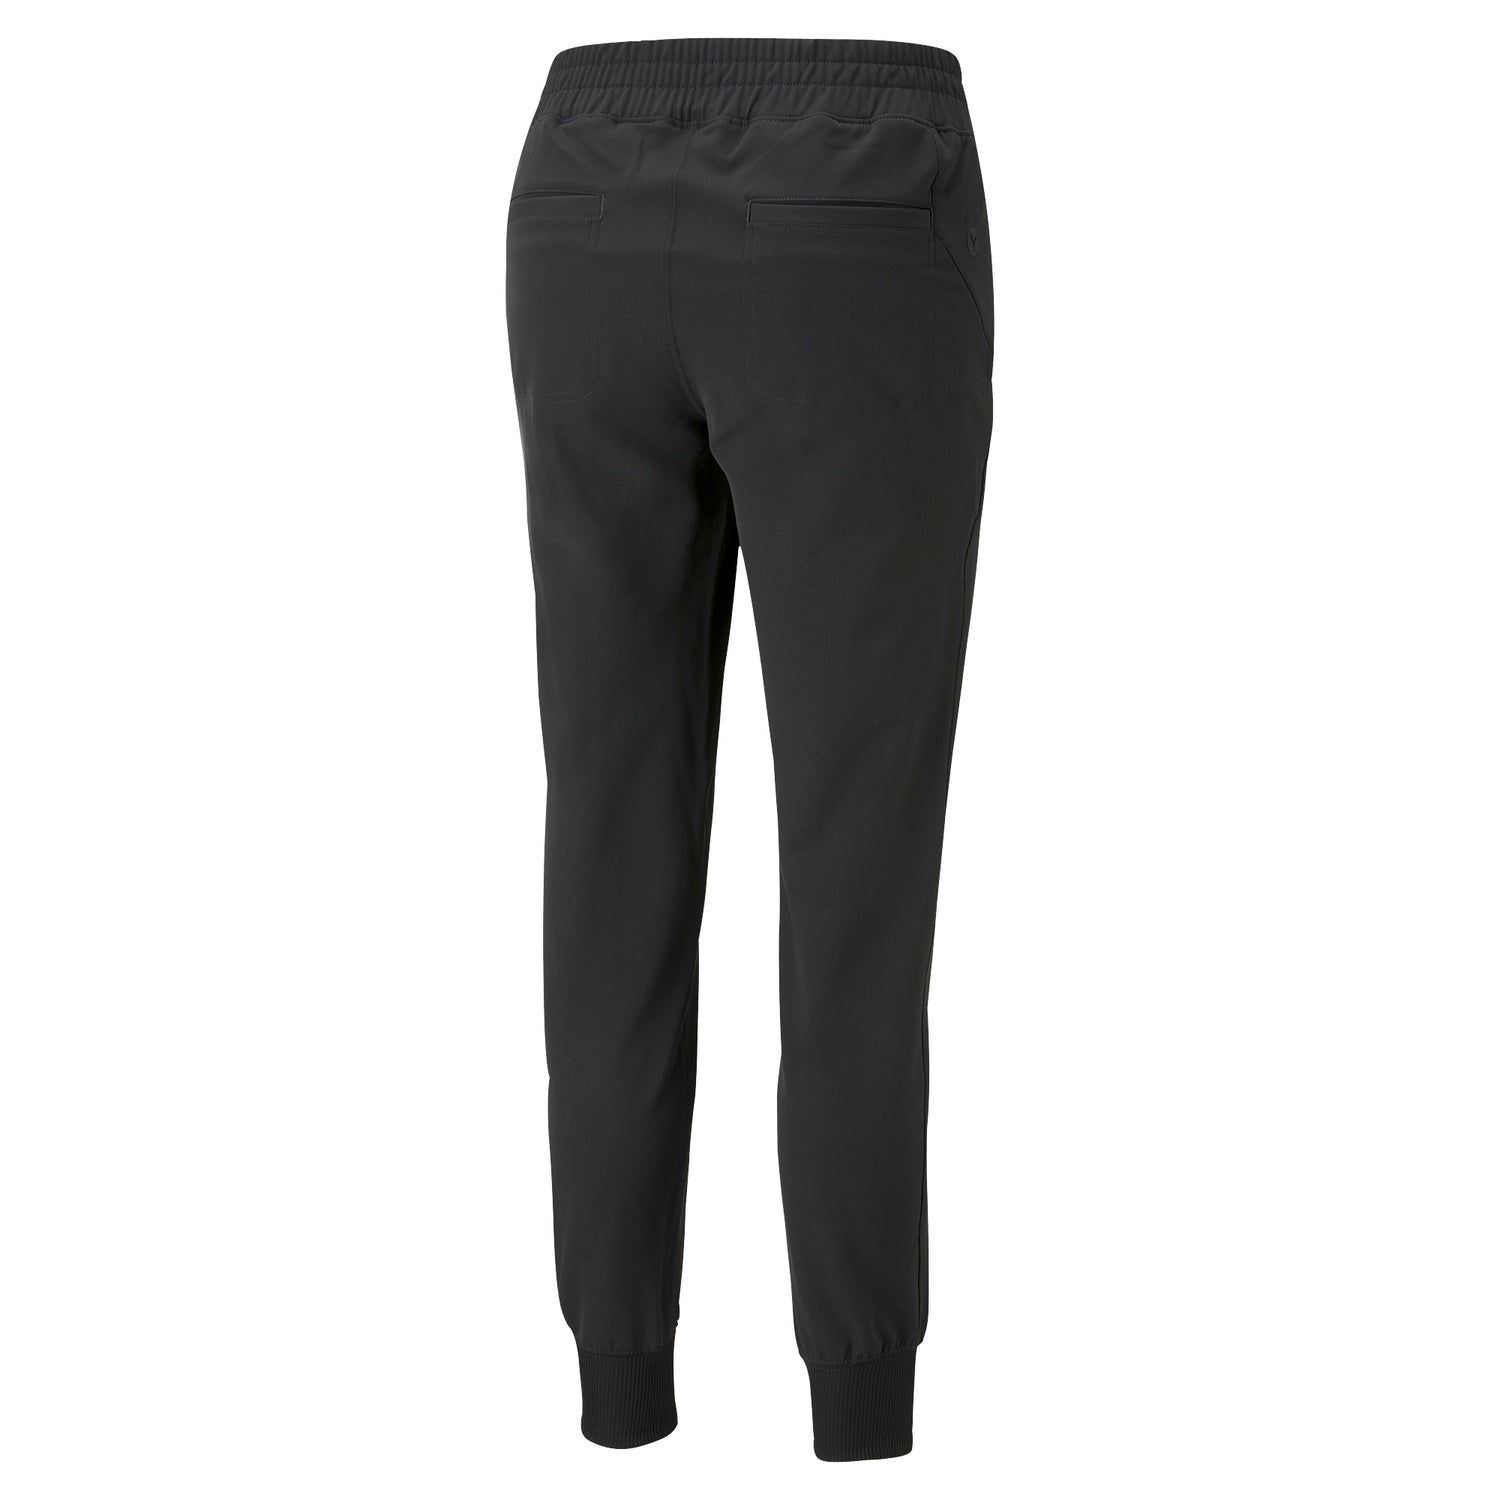  Golf Pants Women Split Pant Legs Slim Elastic Trousers  Quick-Drying Lady Golf Clothing Tennis Sports Pants (Black,XS) : Clothing,  Shoes & Jewelry